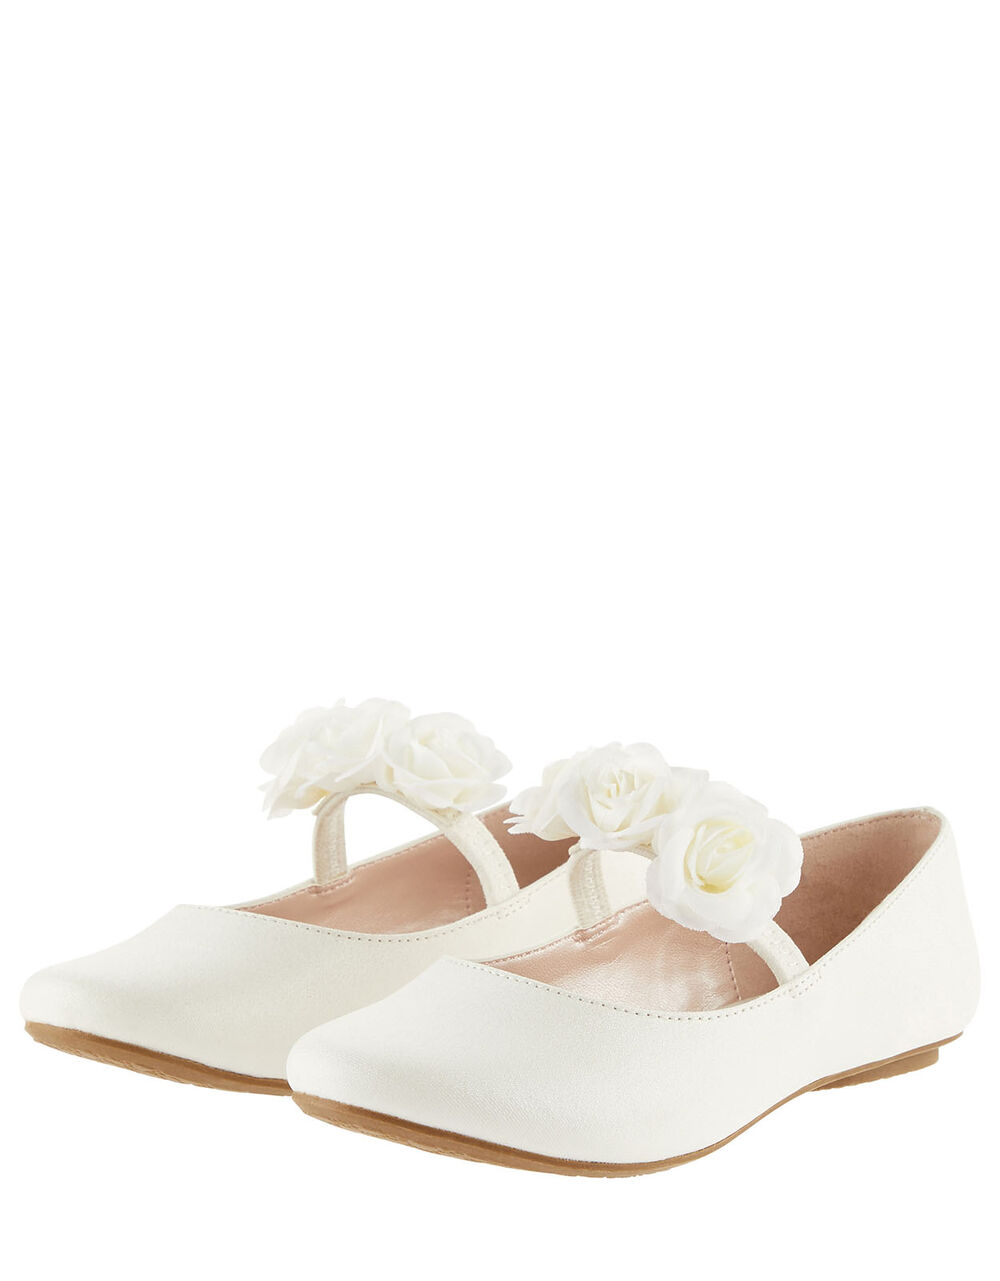 Children Children's Shoes & Sandals | Shimmer Corsage Ballerina Flats Ivory - UA13163